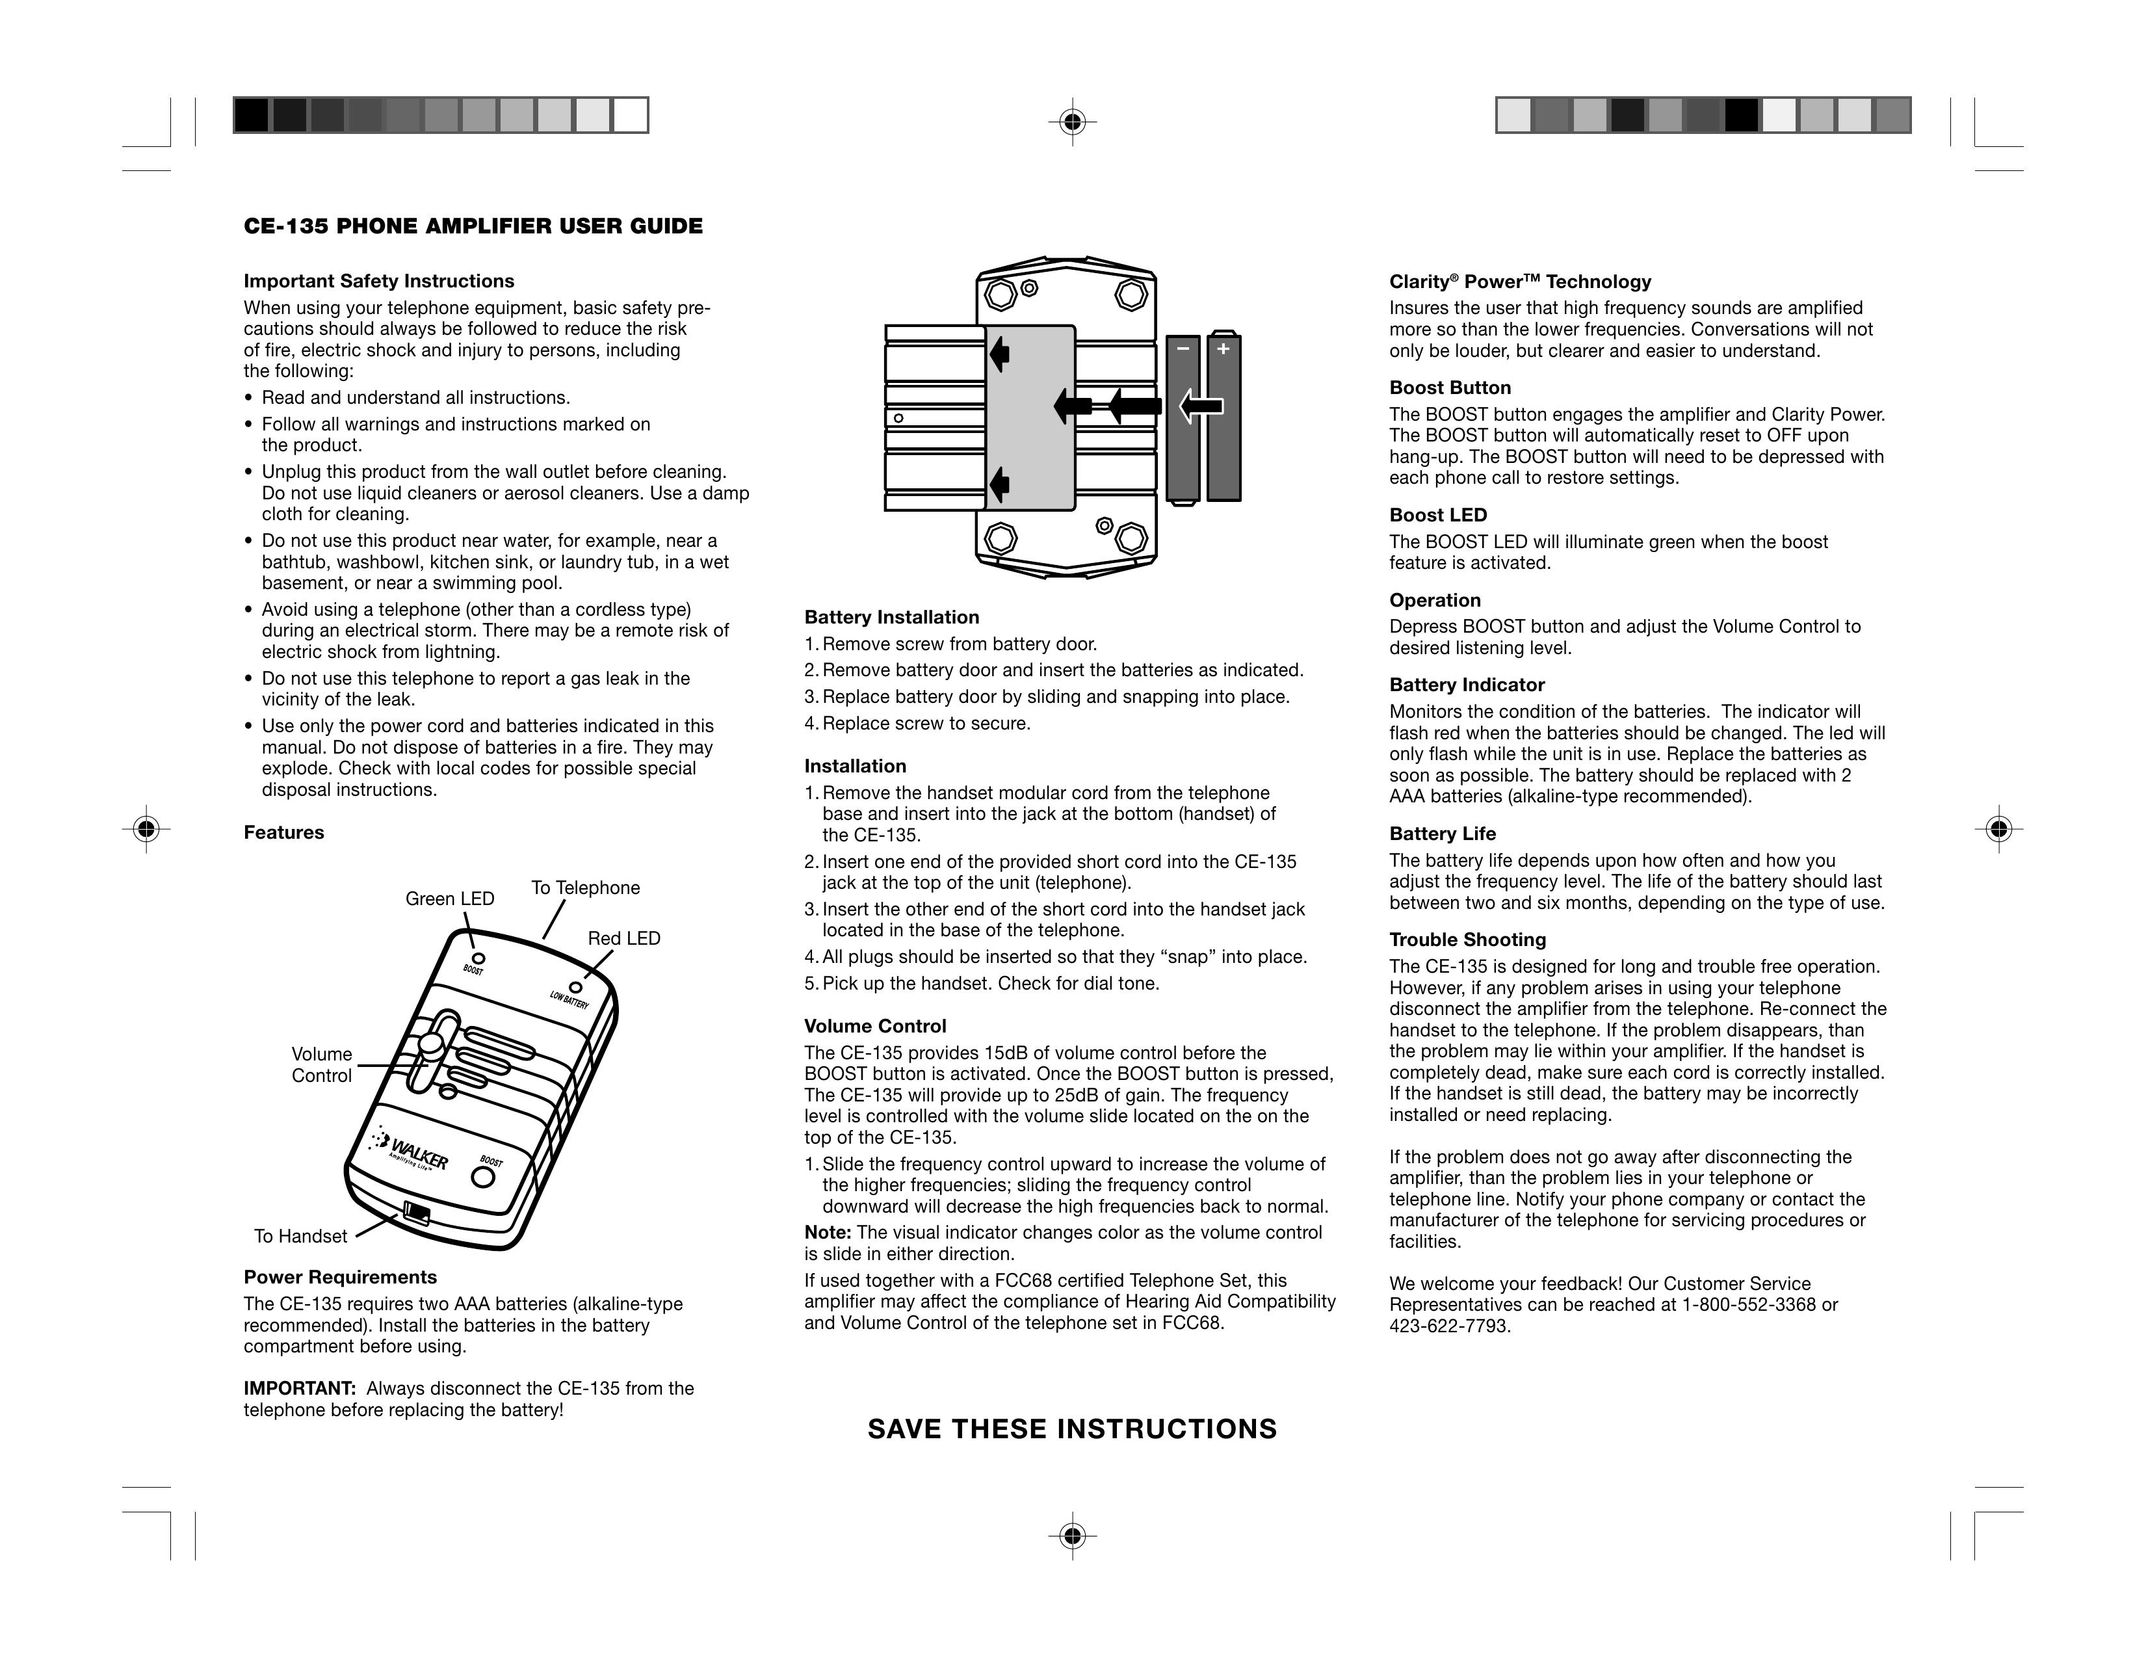 Radio Shack CE-135 Telephone Accessories User Manual